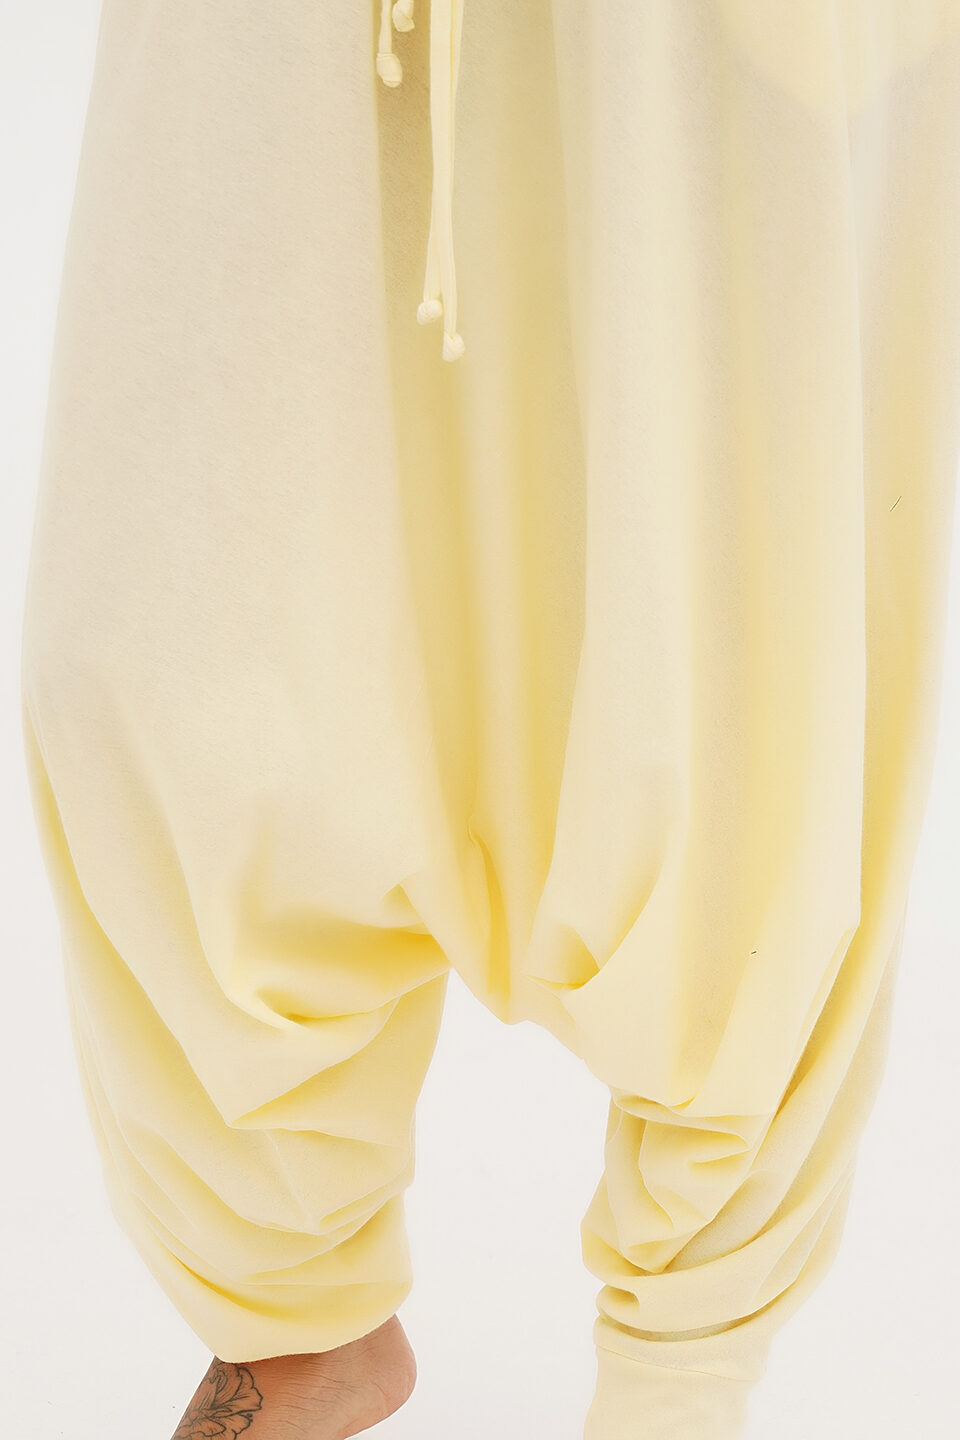 PARASHUTE PANTS for summer pastel yellow color